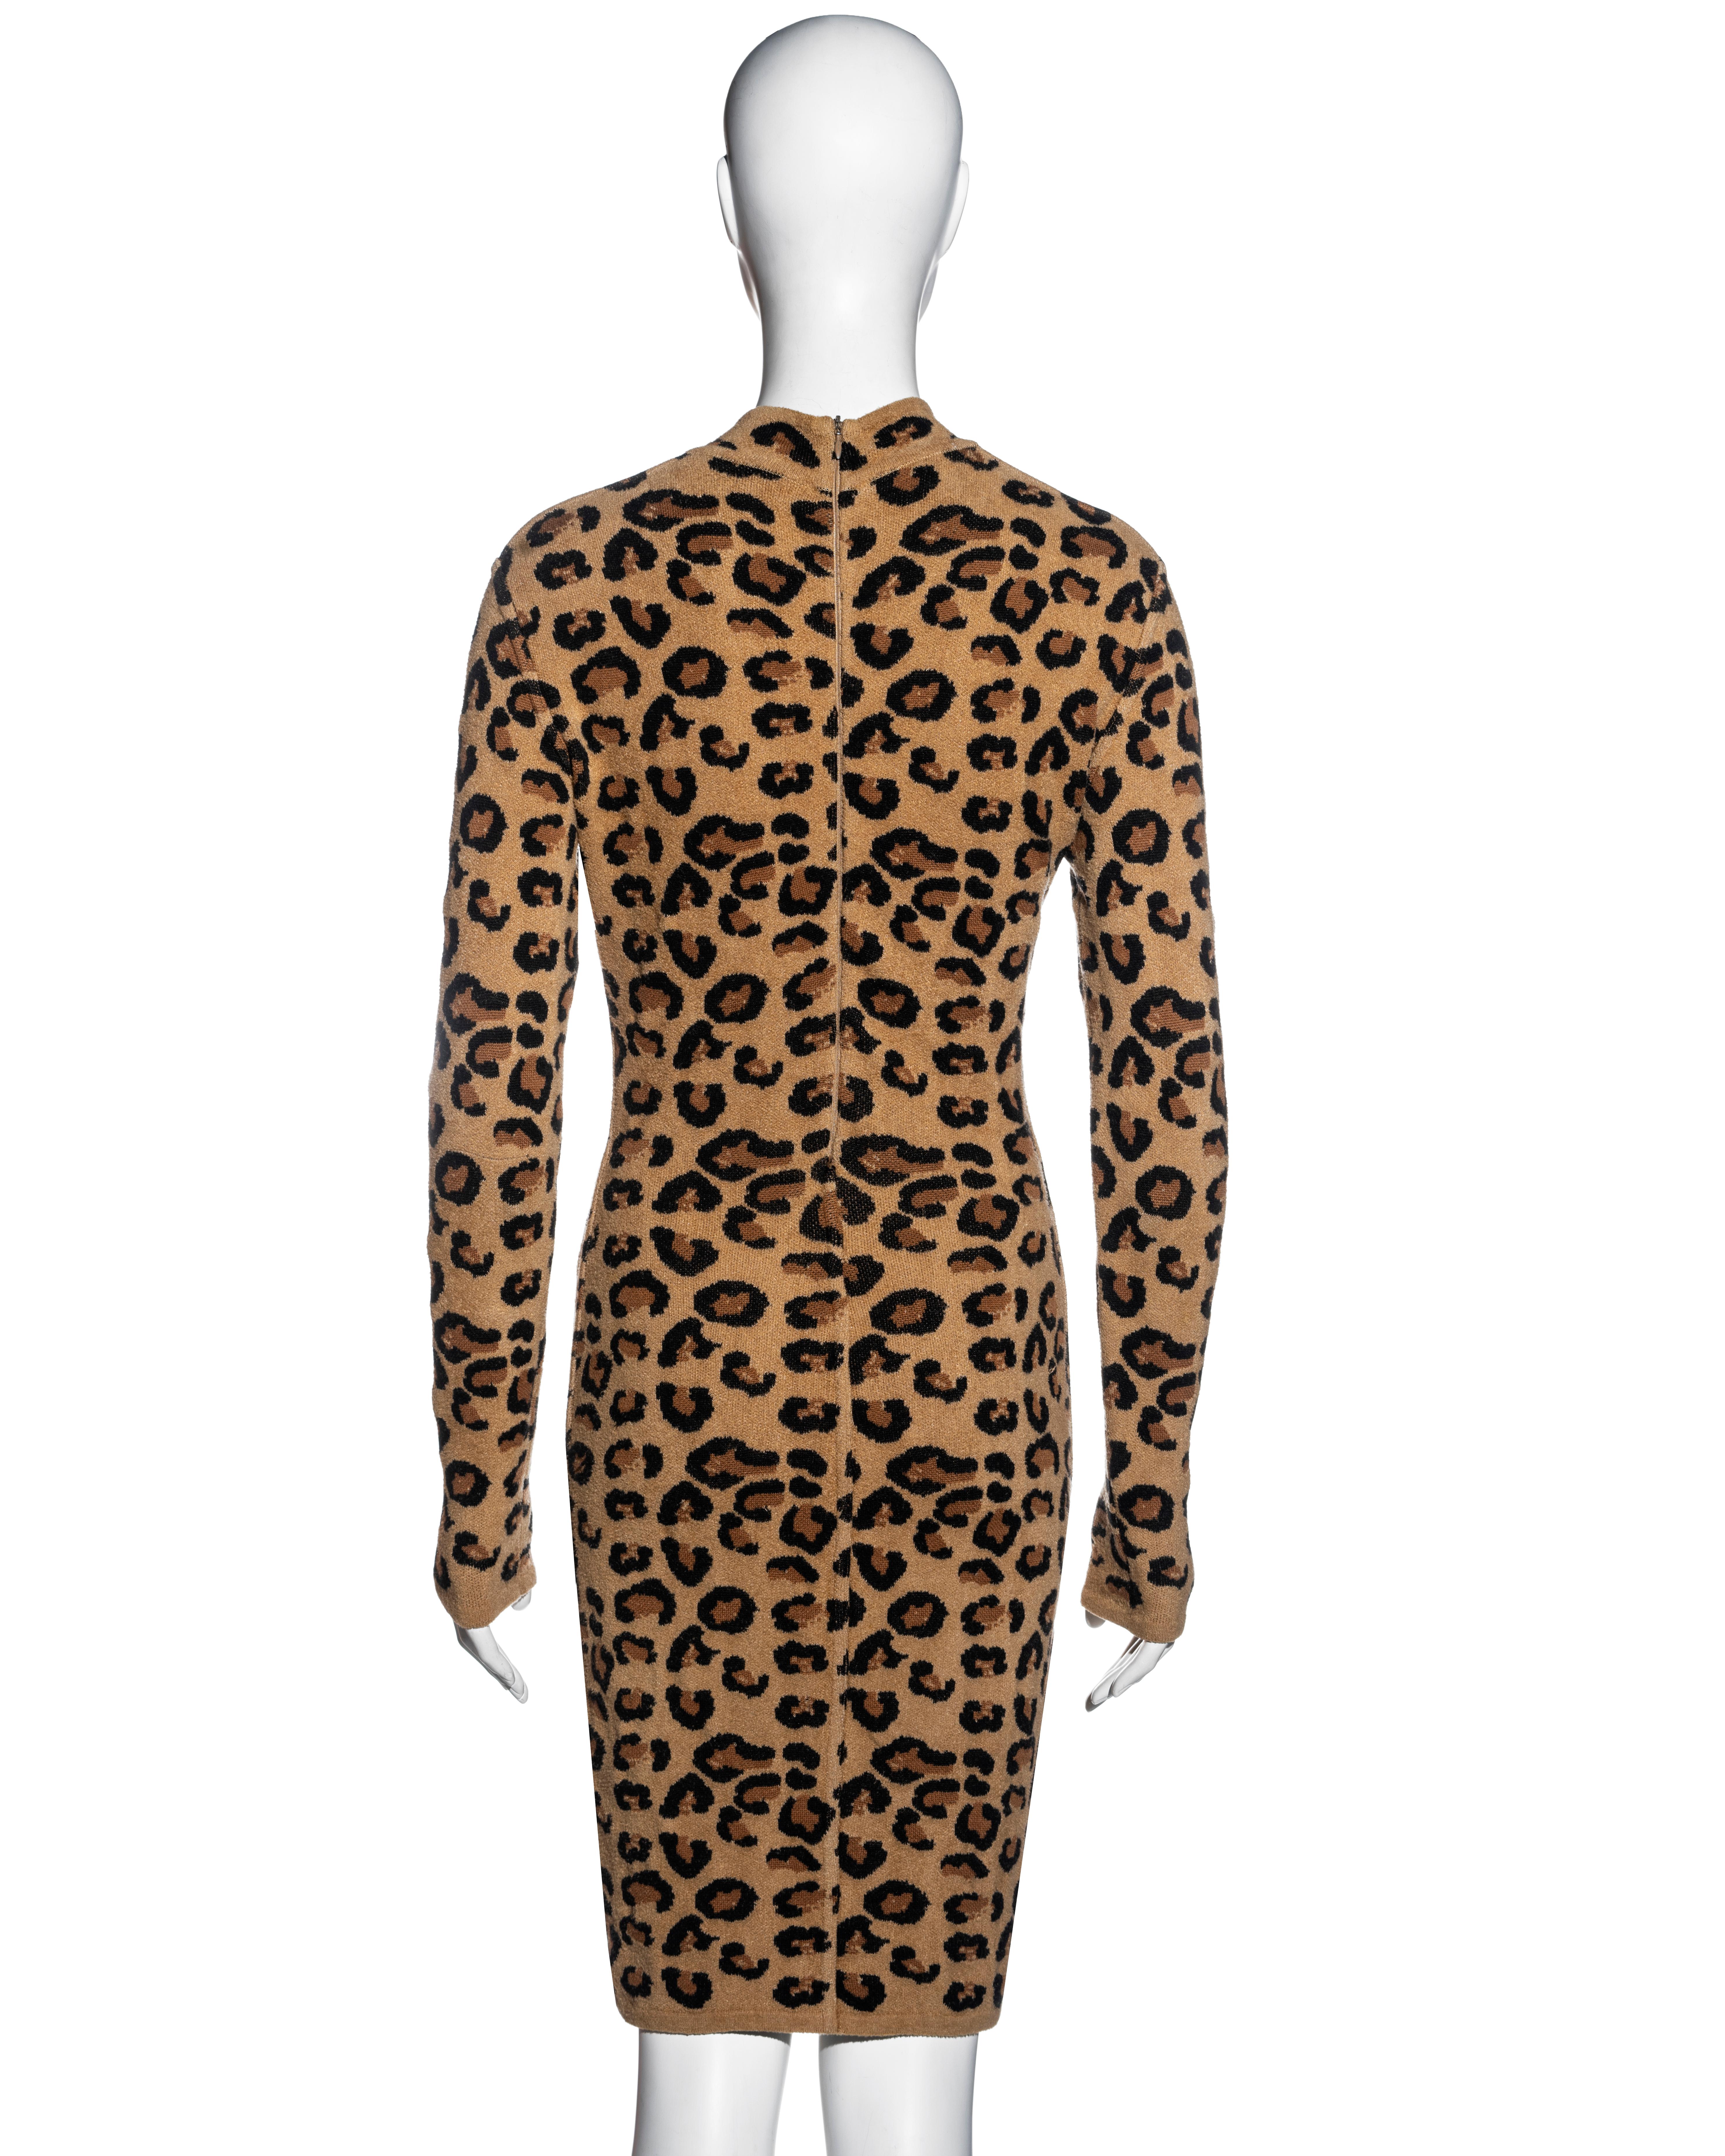 Azzedine Alaia leopard wool dress, cardigan, skirt and leggings set, fw 1991 For Sale 9